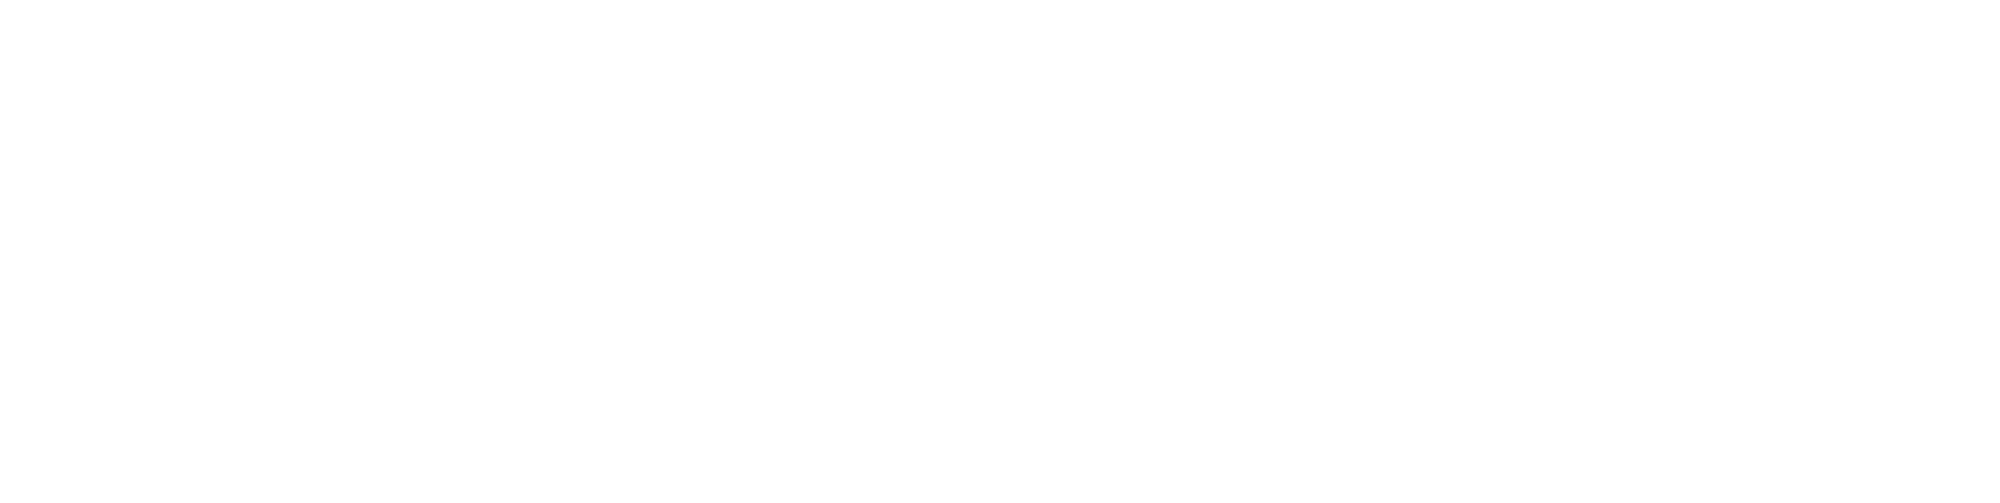 The Accommodation Bureau